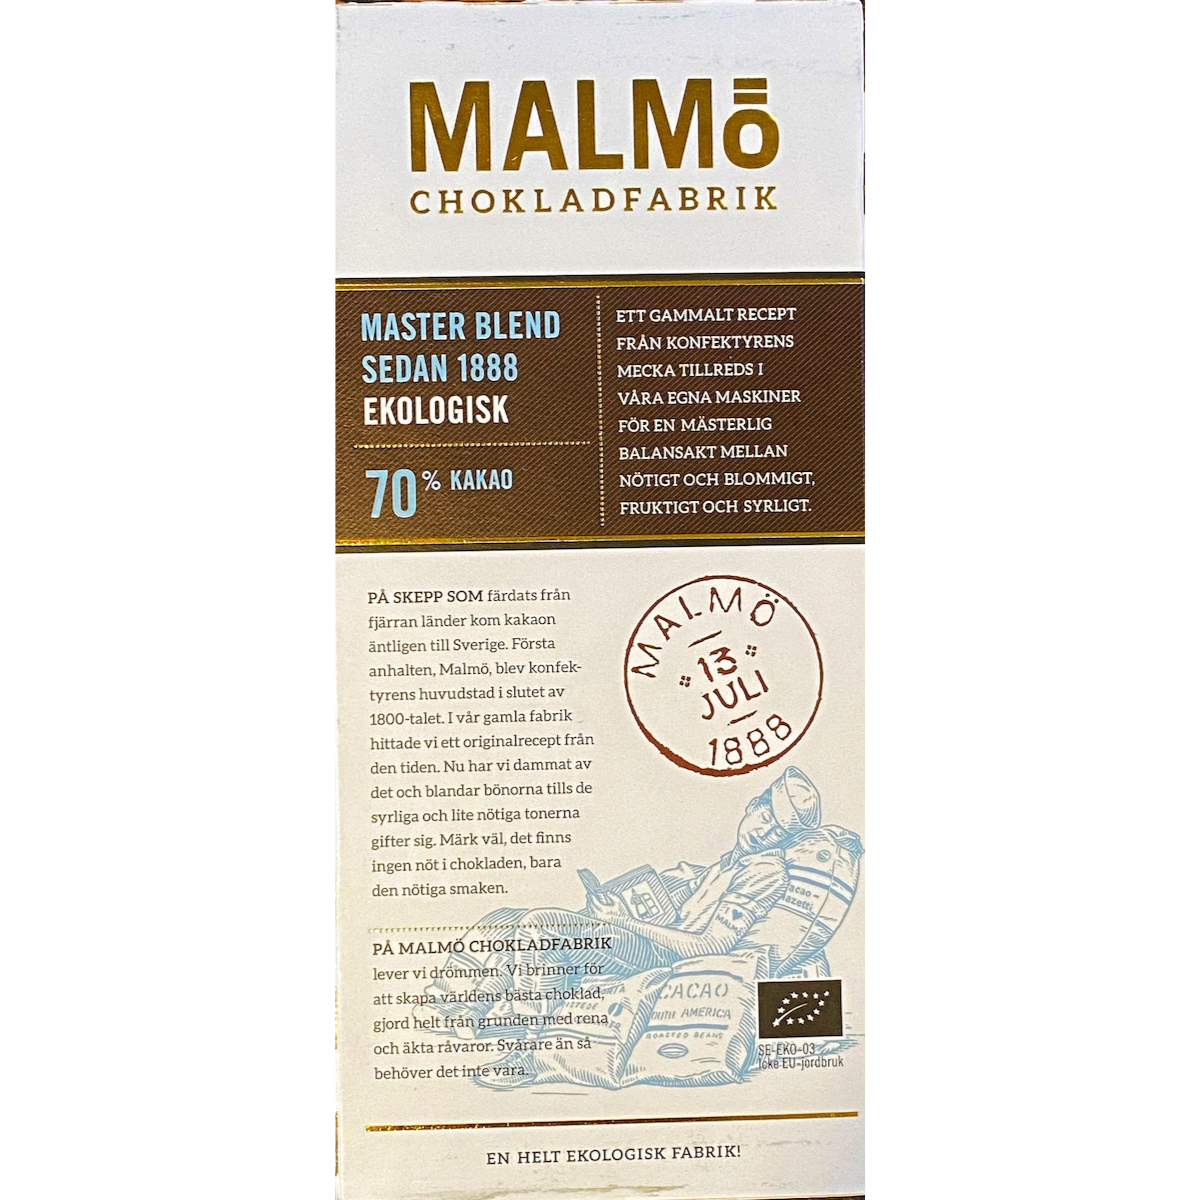 Malmö Chokladfabrik's Malmö Master Blend'